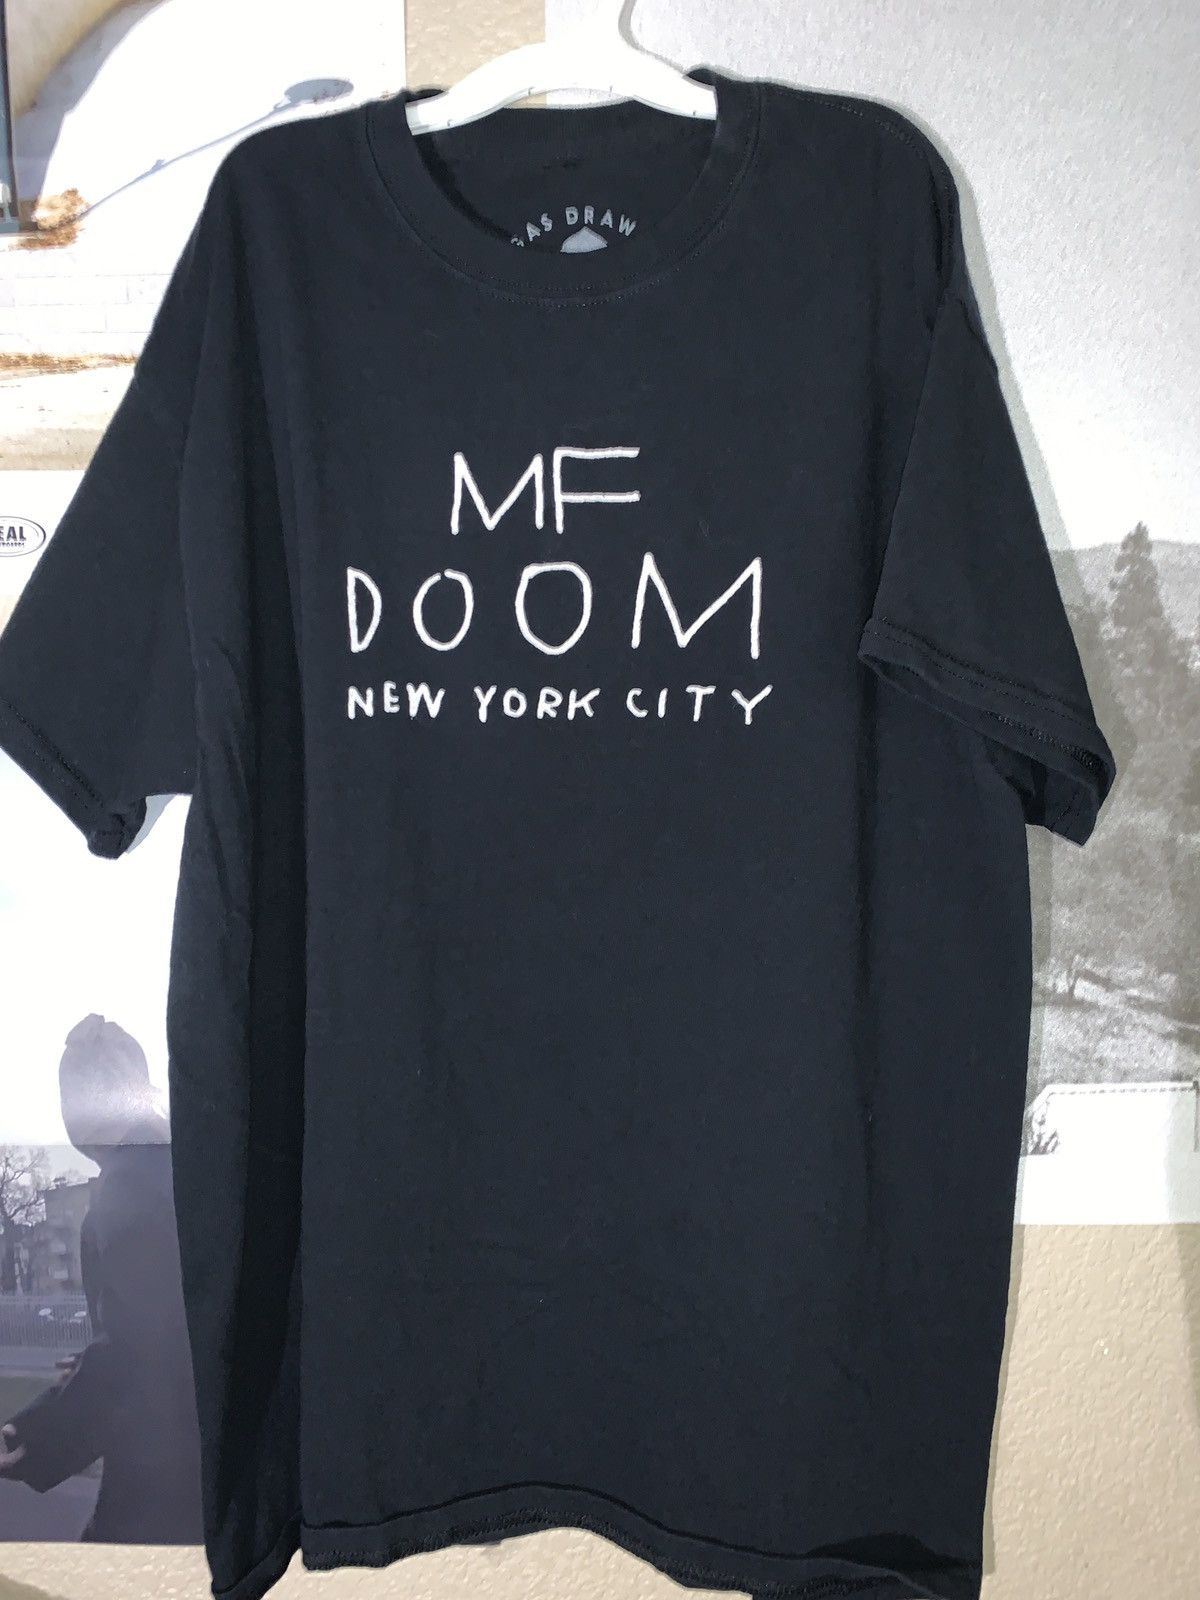 Mf Doom MF DOOM “Pass the L” tee New York City | Grailed